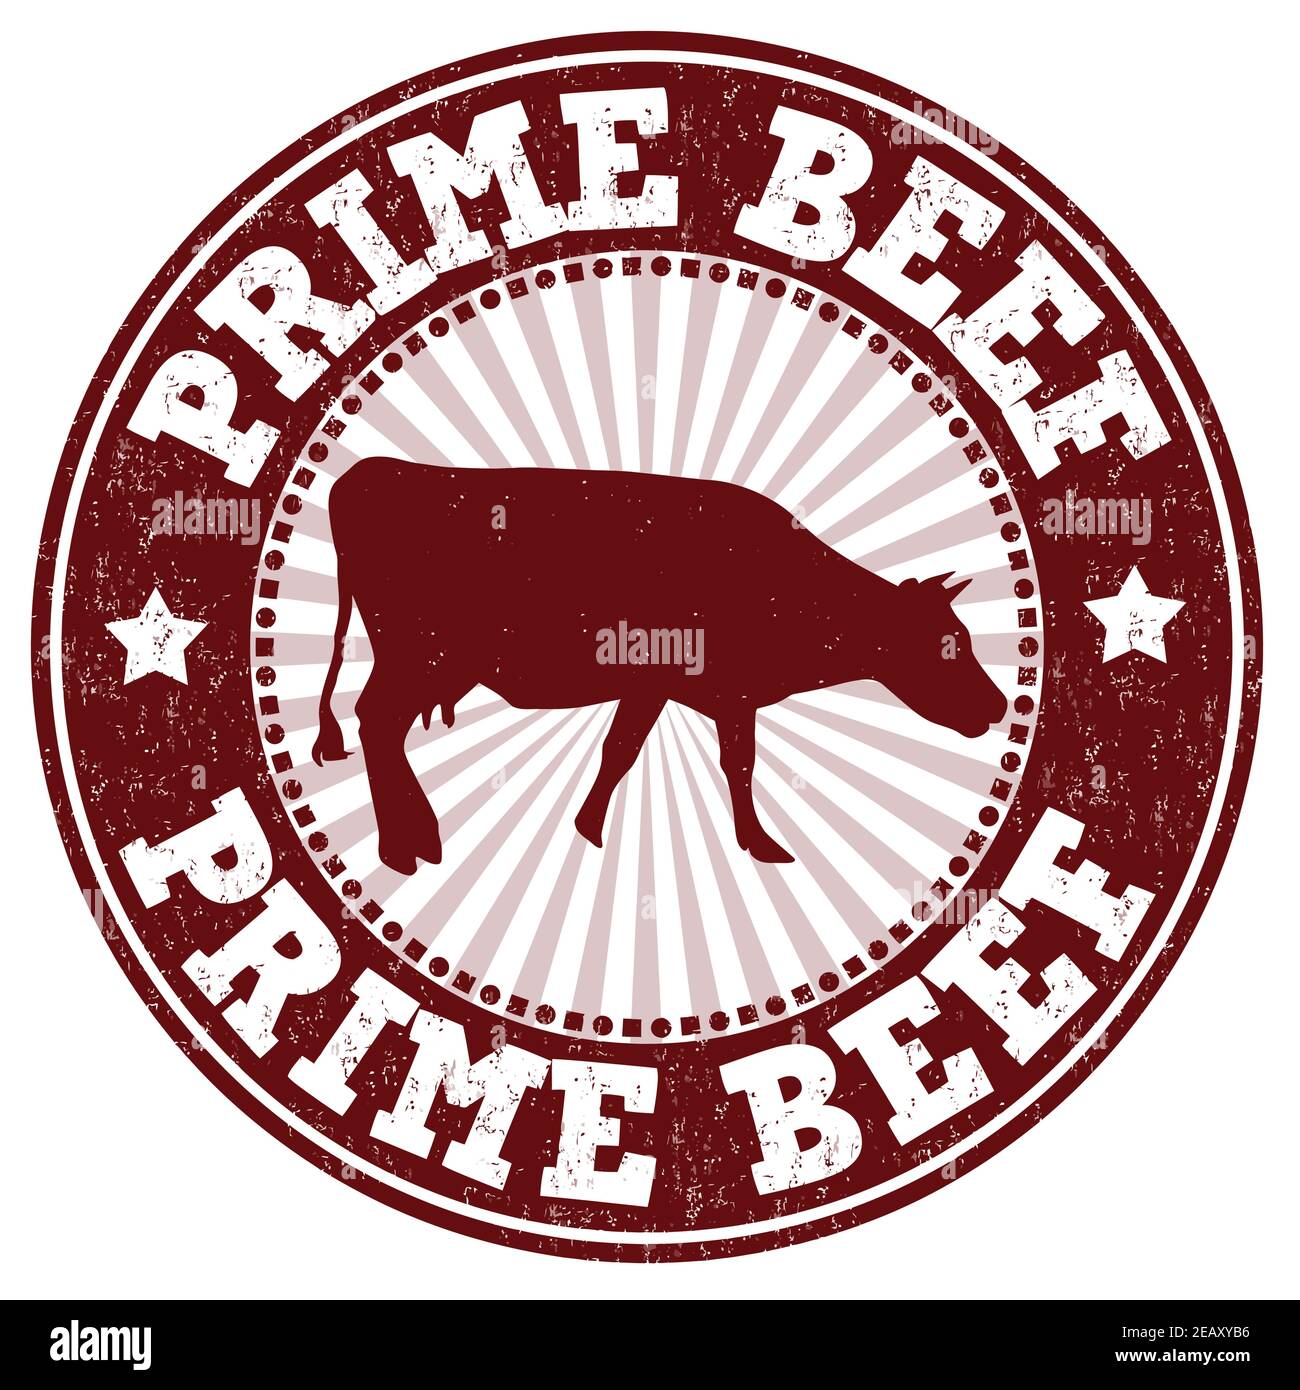 Prime beef grunge rubber stamp on white background, vector illustration ...